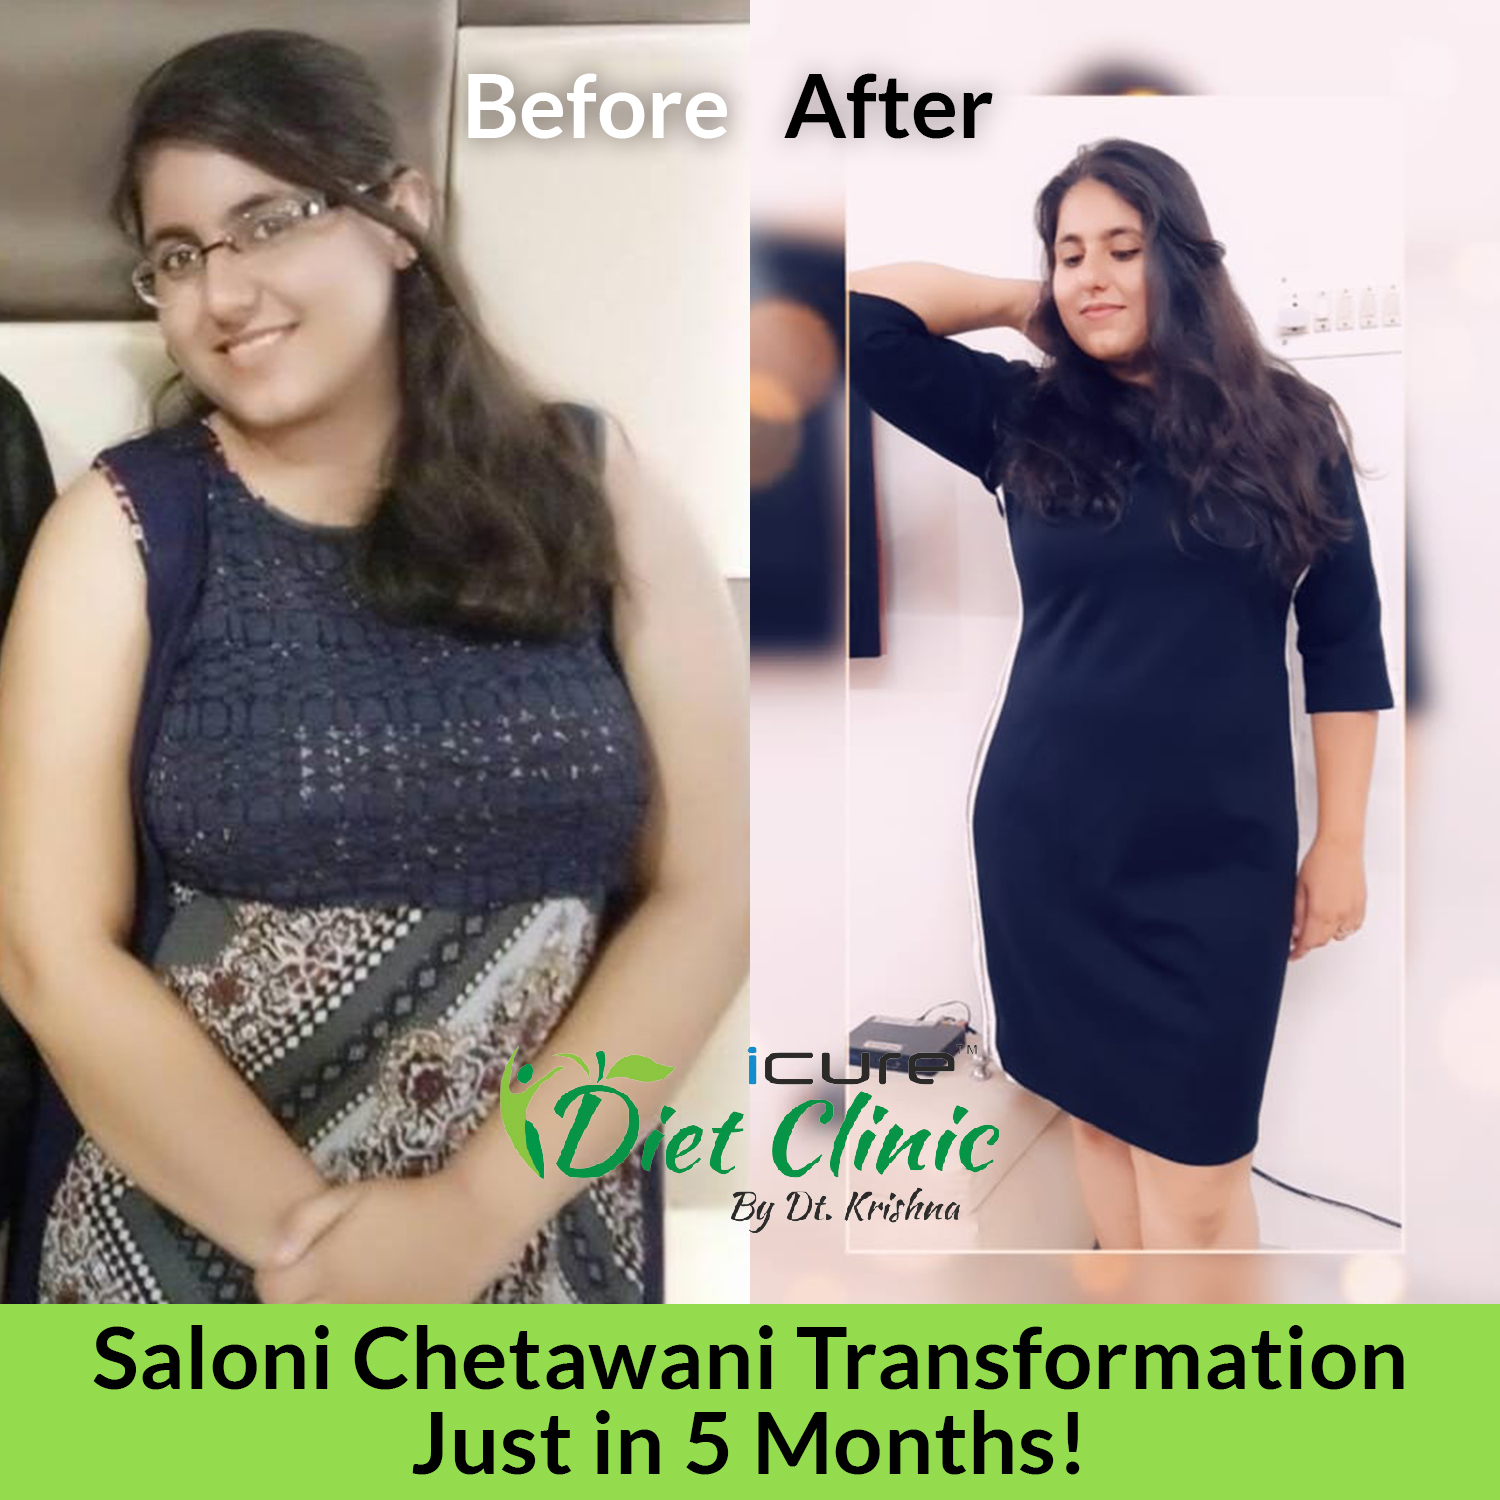 Saloni Chetawani transformation in 5 months